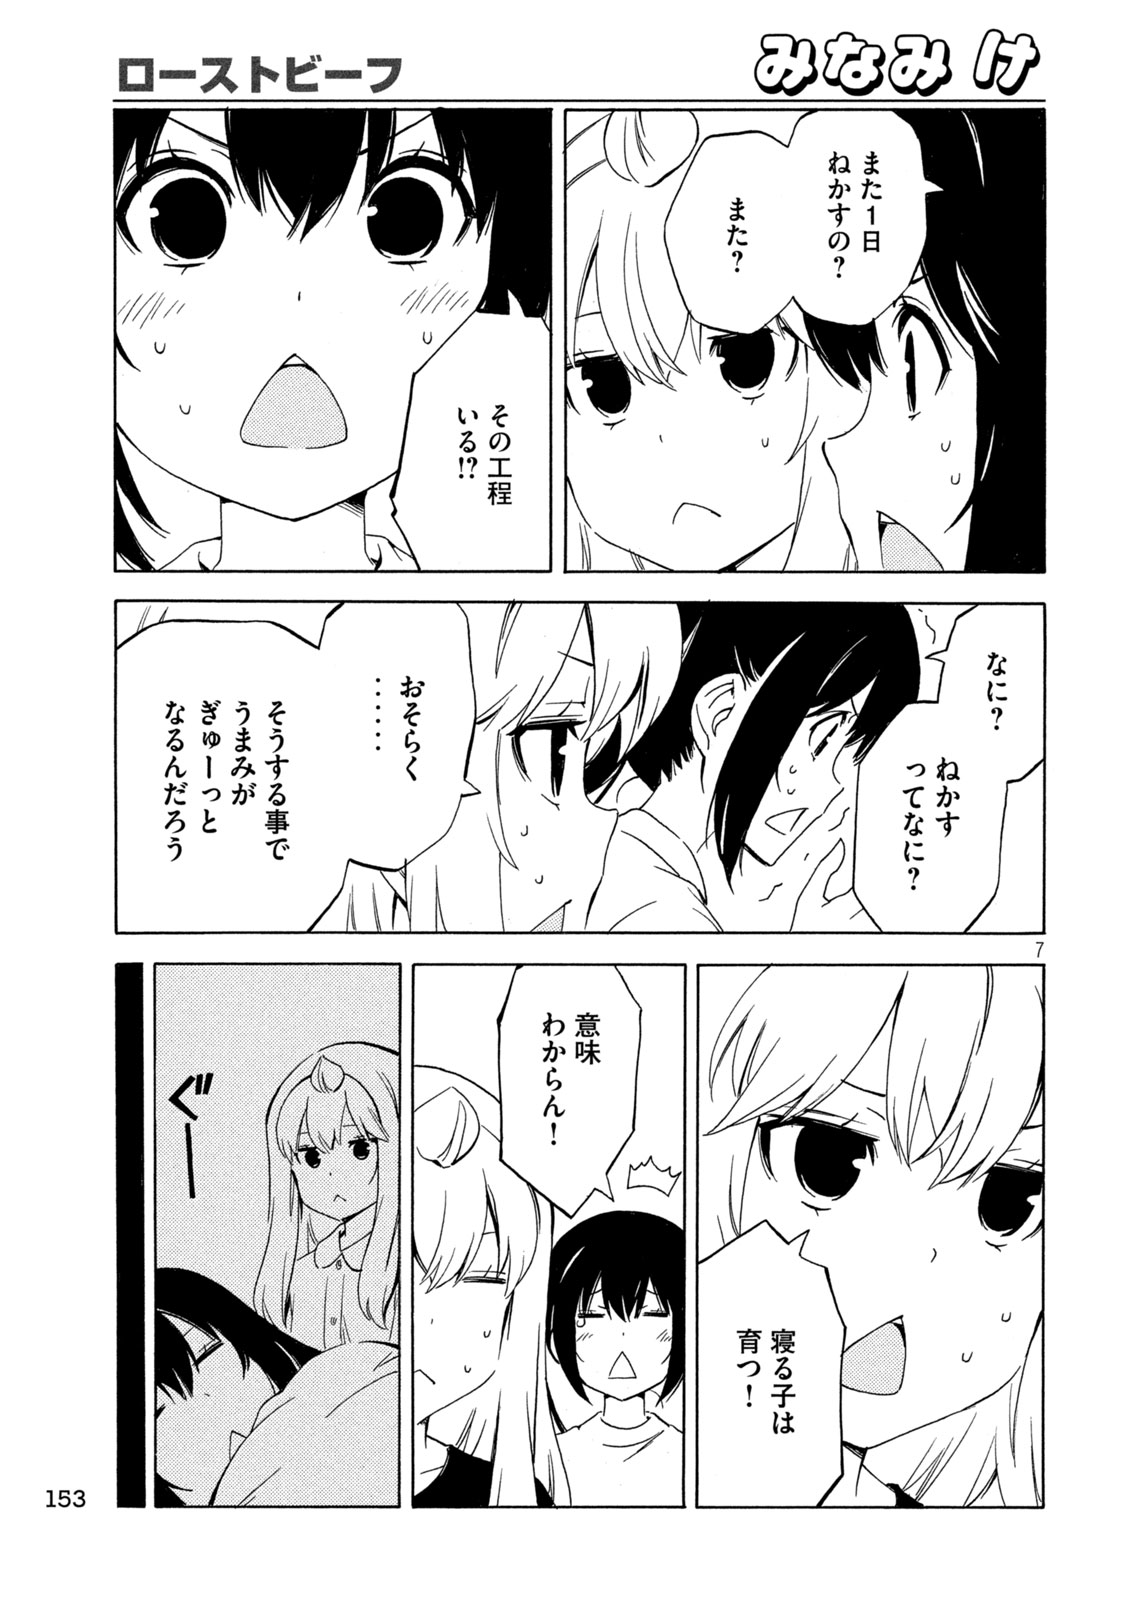 Minami-ke - Chapter 477 - Page 7